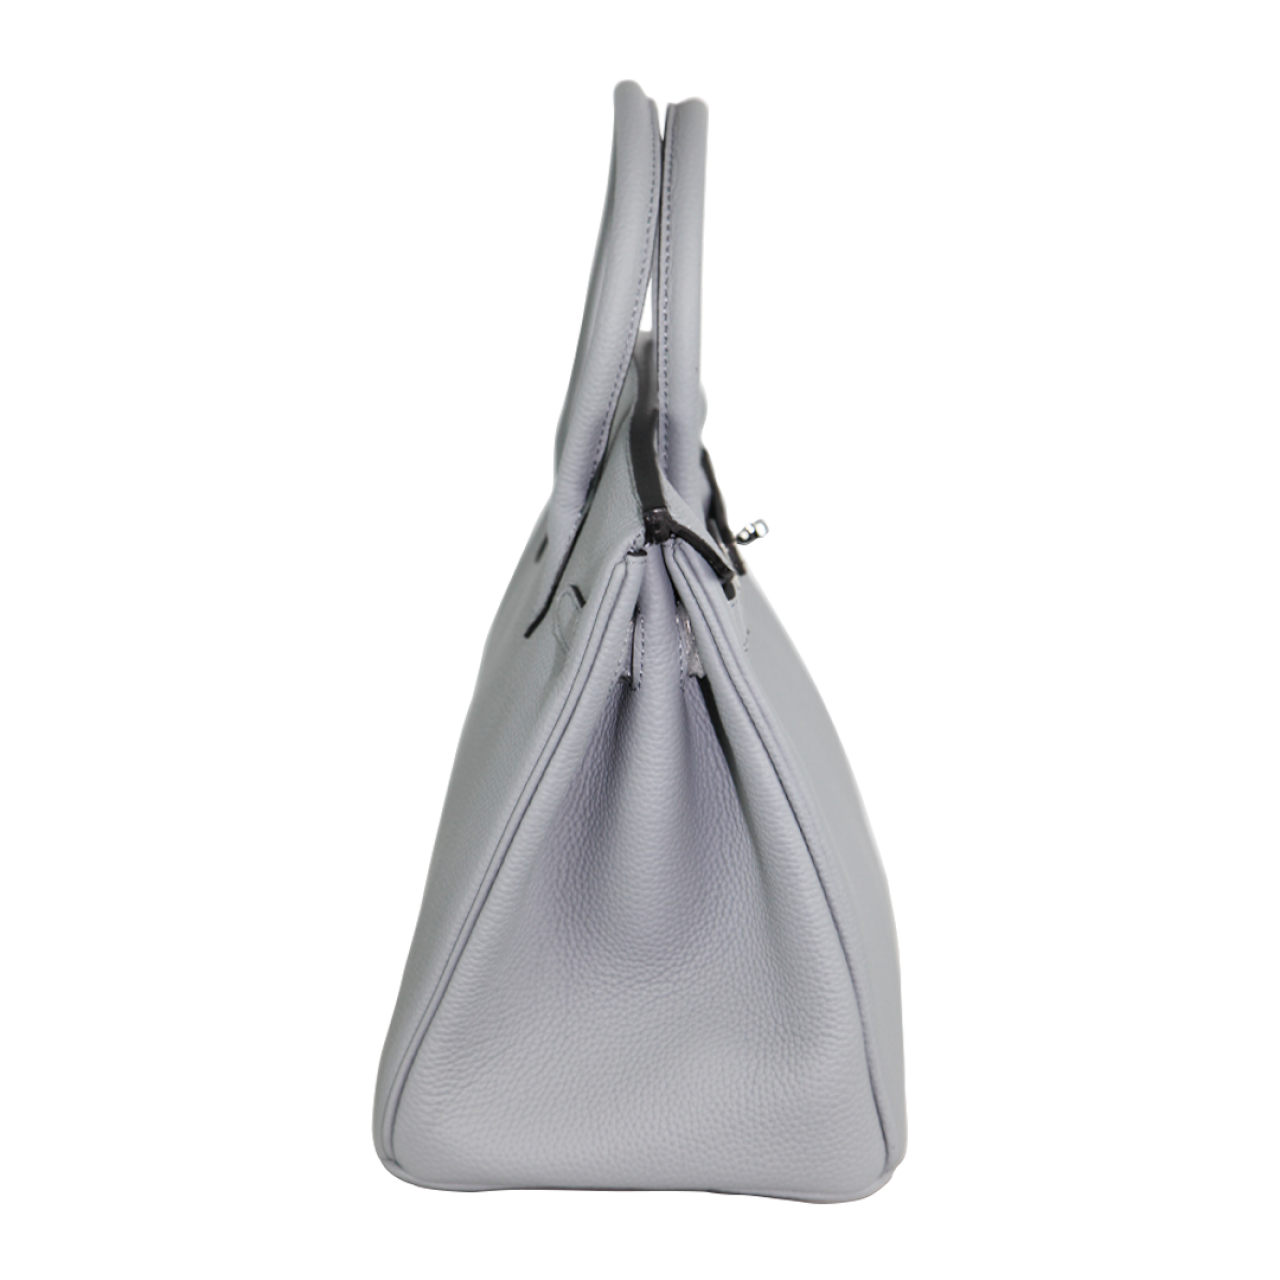 Zeekas Women PU Leather Silver Hardware Top Handle Satchel Purse White Tote Shoulder Bag